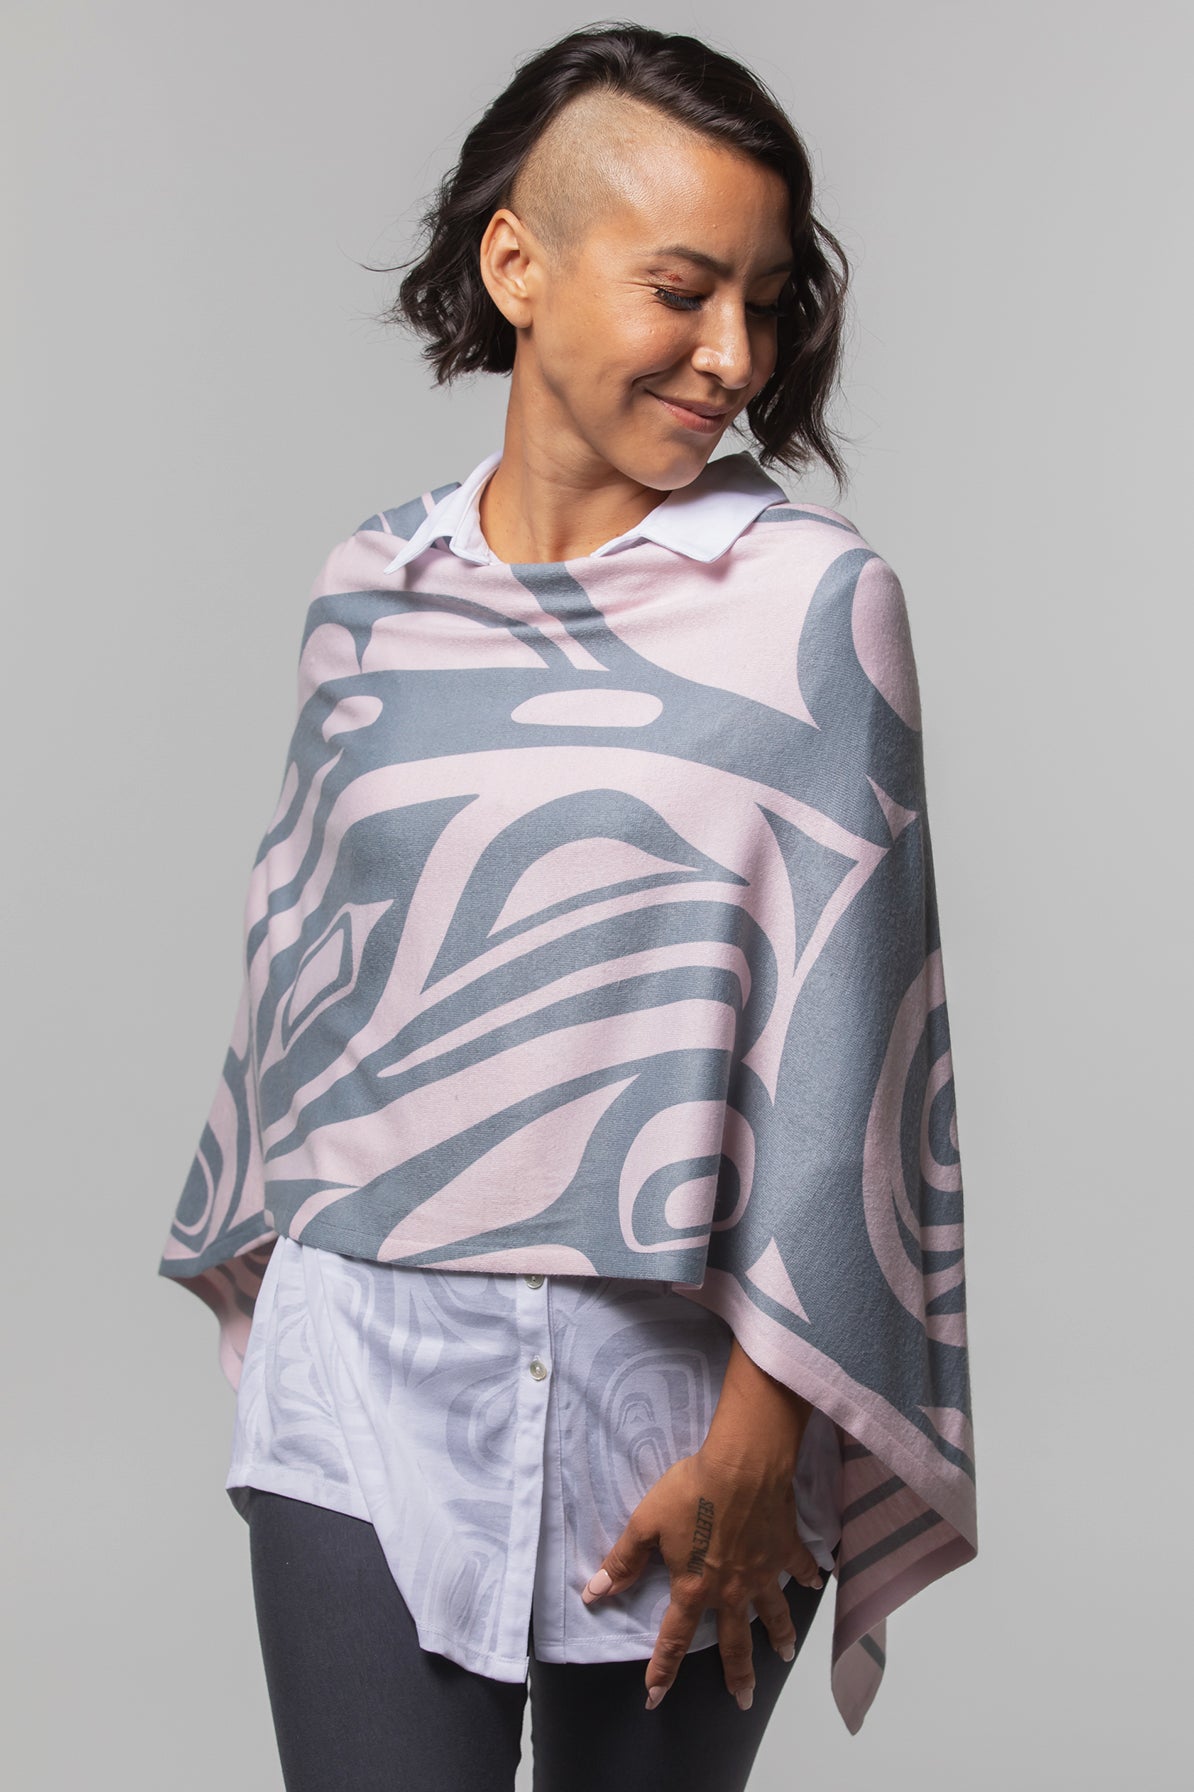 Chloe Angus Design Spirit Wrap with Orca Eagle print by Corrine Hunt